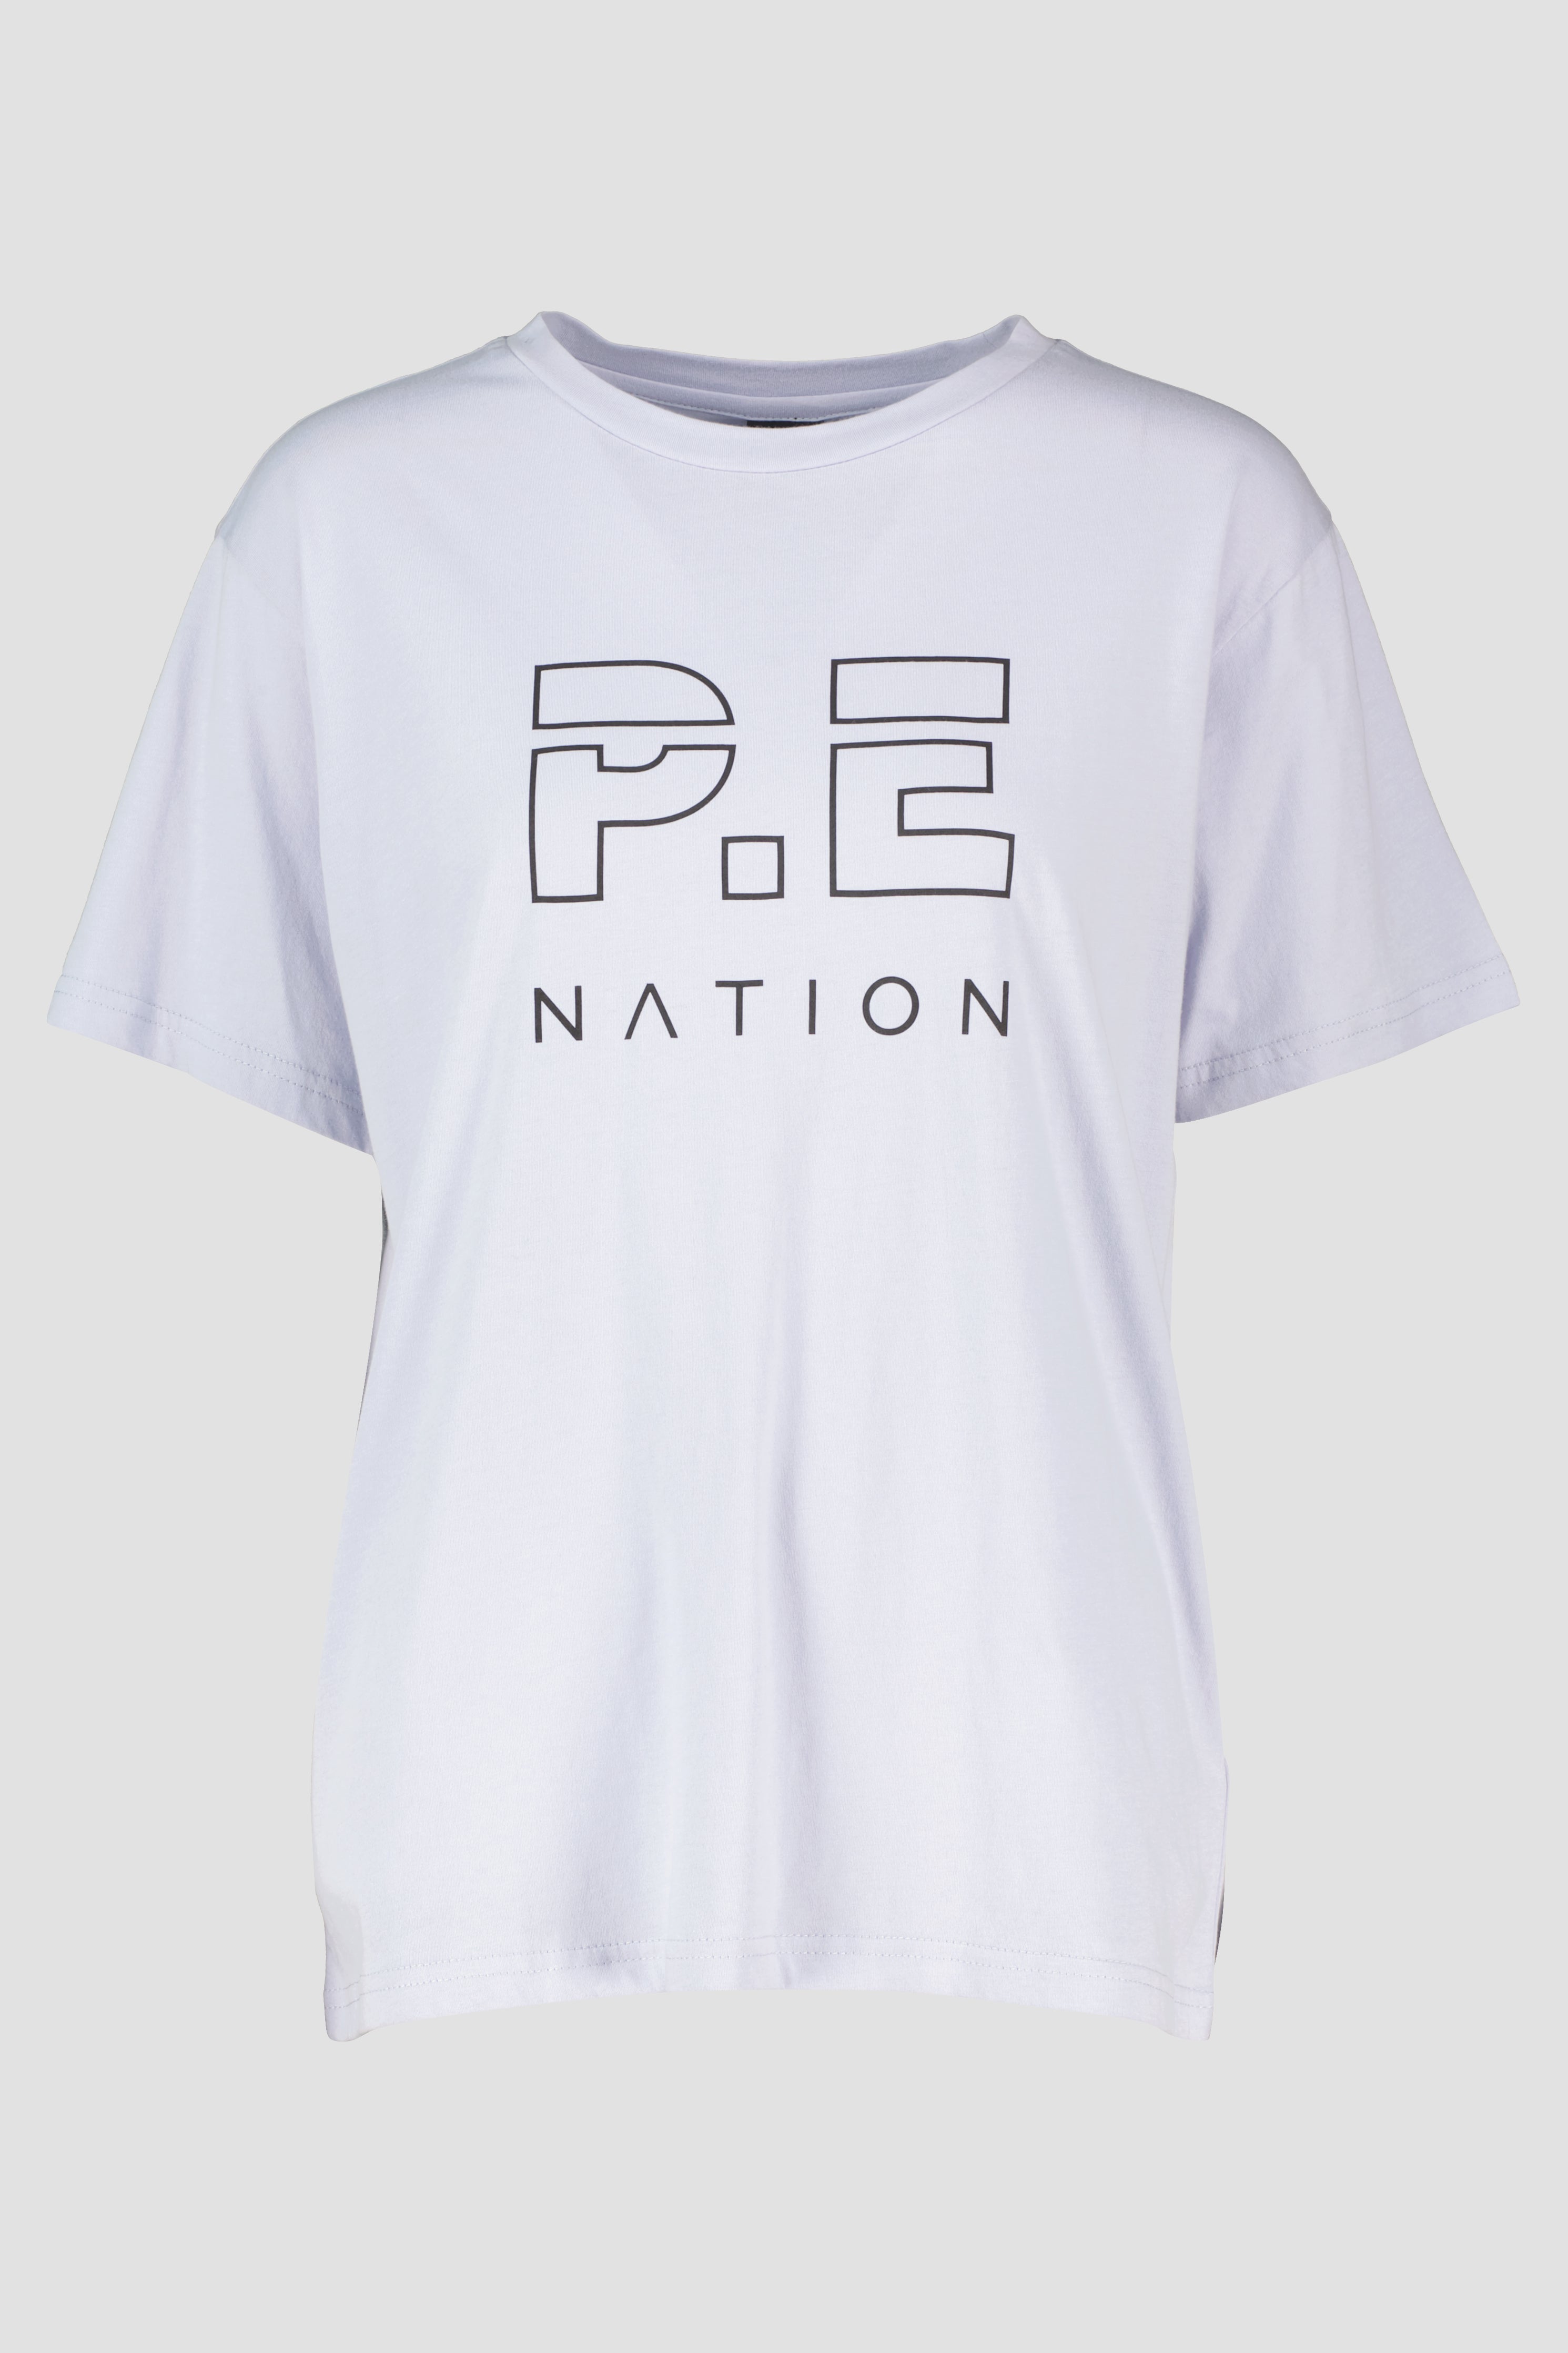 Women's P.E Nation Grey Dawn Heads Up T Shirt